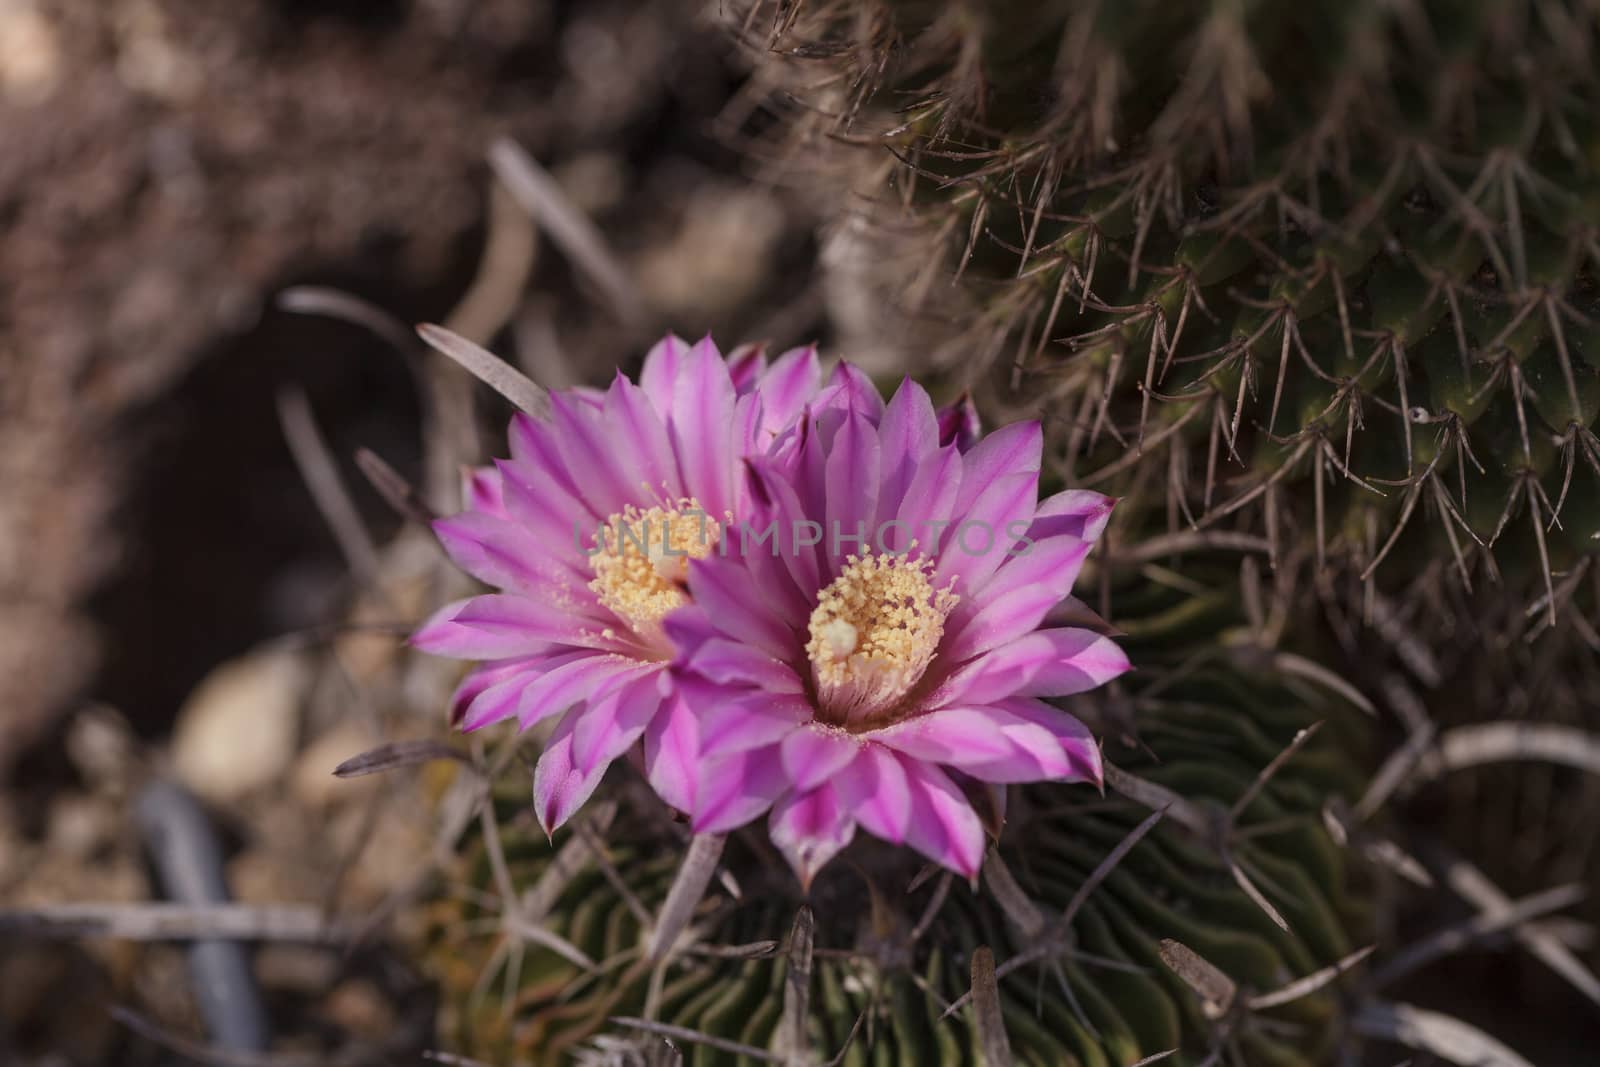 White, pink and yellow cactus flower, Stenocactus crispatus, Echinofossulocactus blooms in a desert garden in Mexico